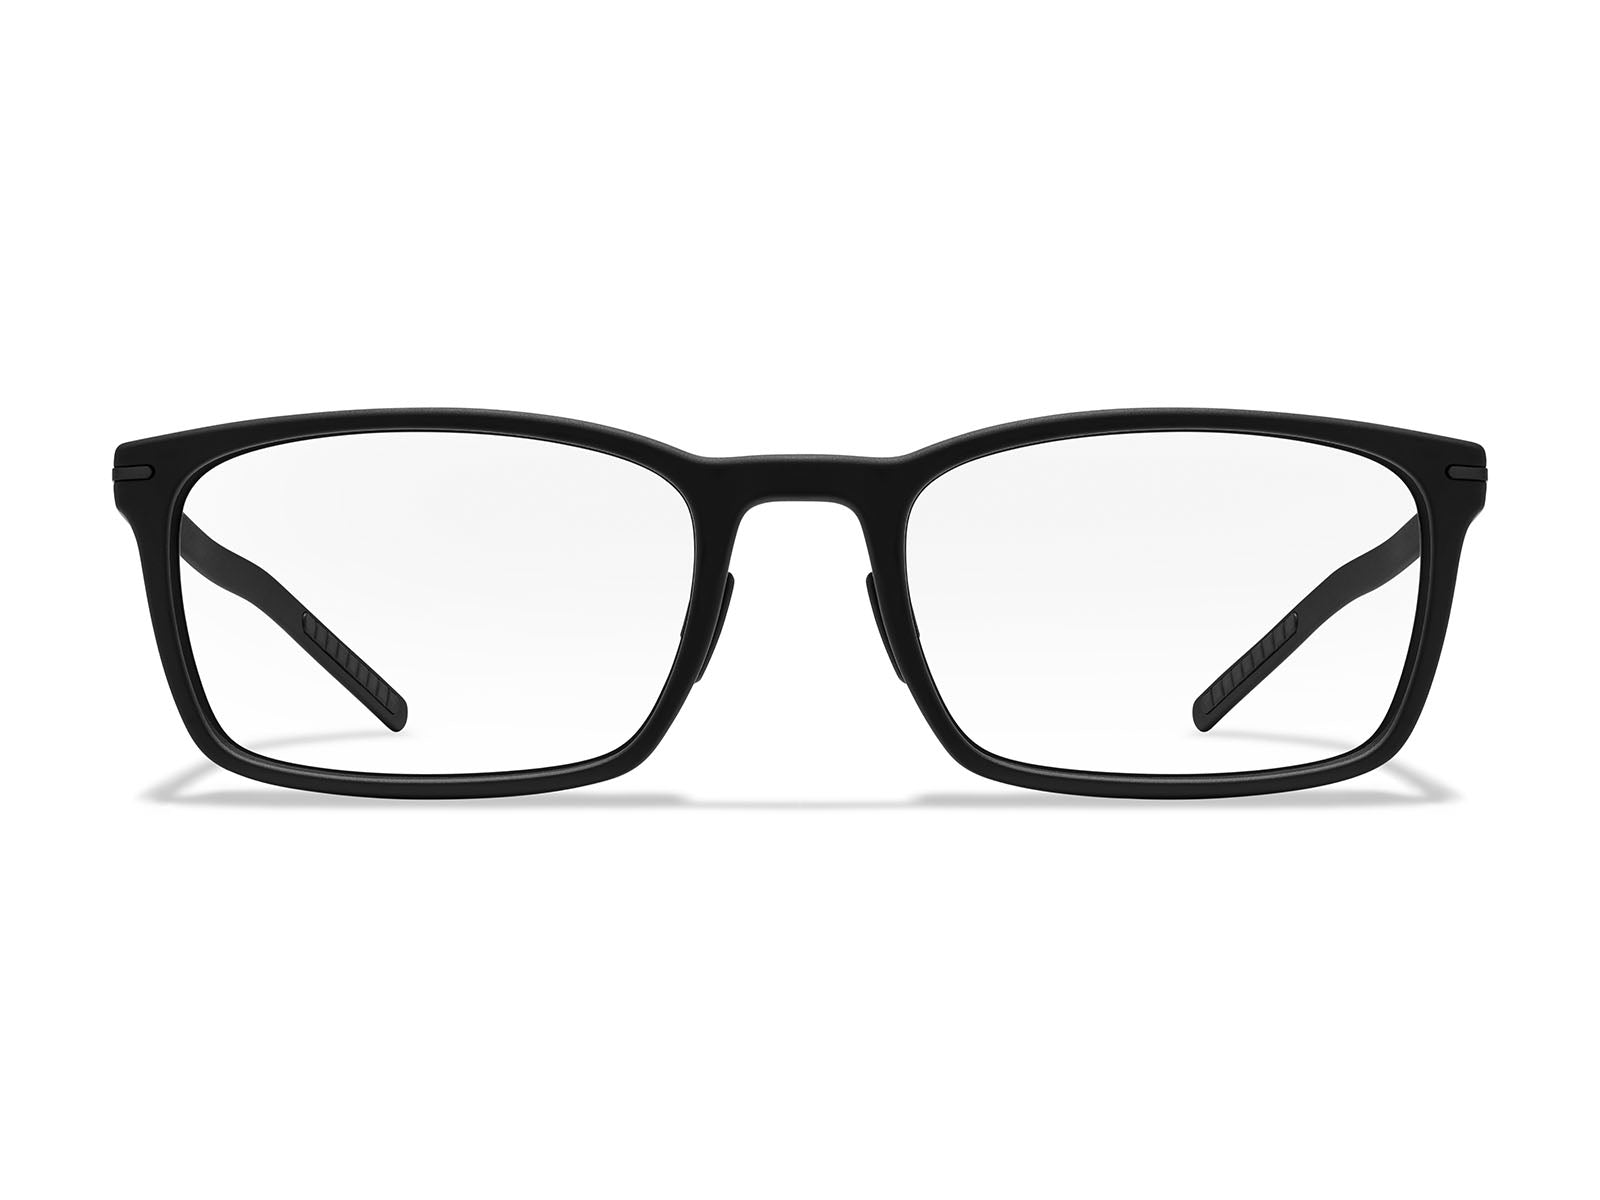 System 3 : Rectangular Nose Pads for Glasses Frames